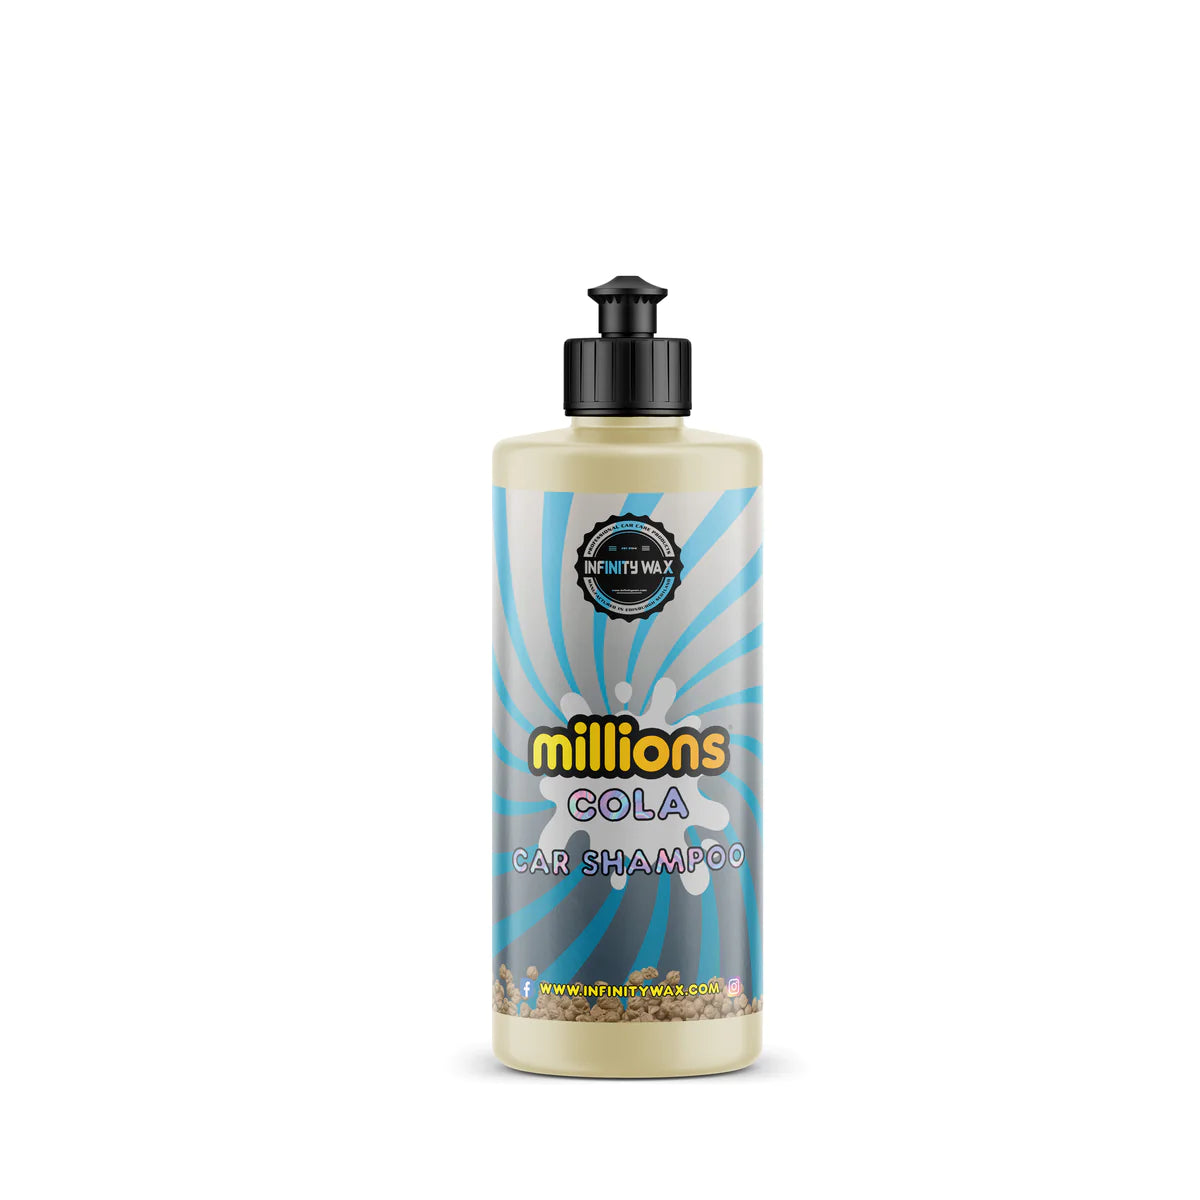 Infinity Wax Millions Cola Car Shampoo 500ml